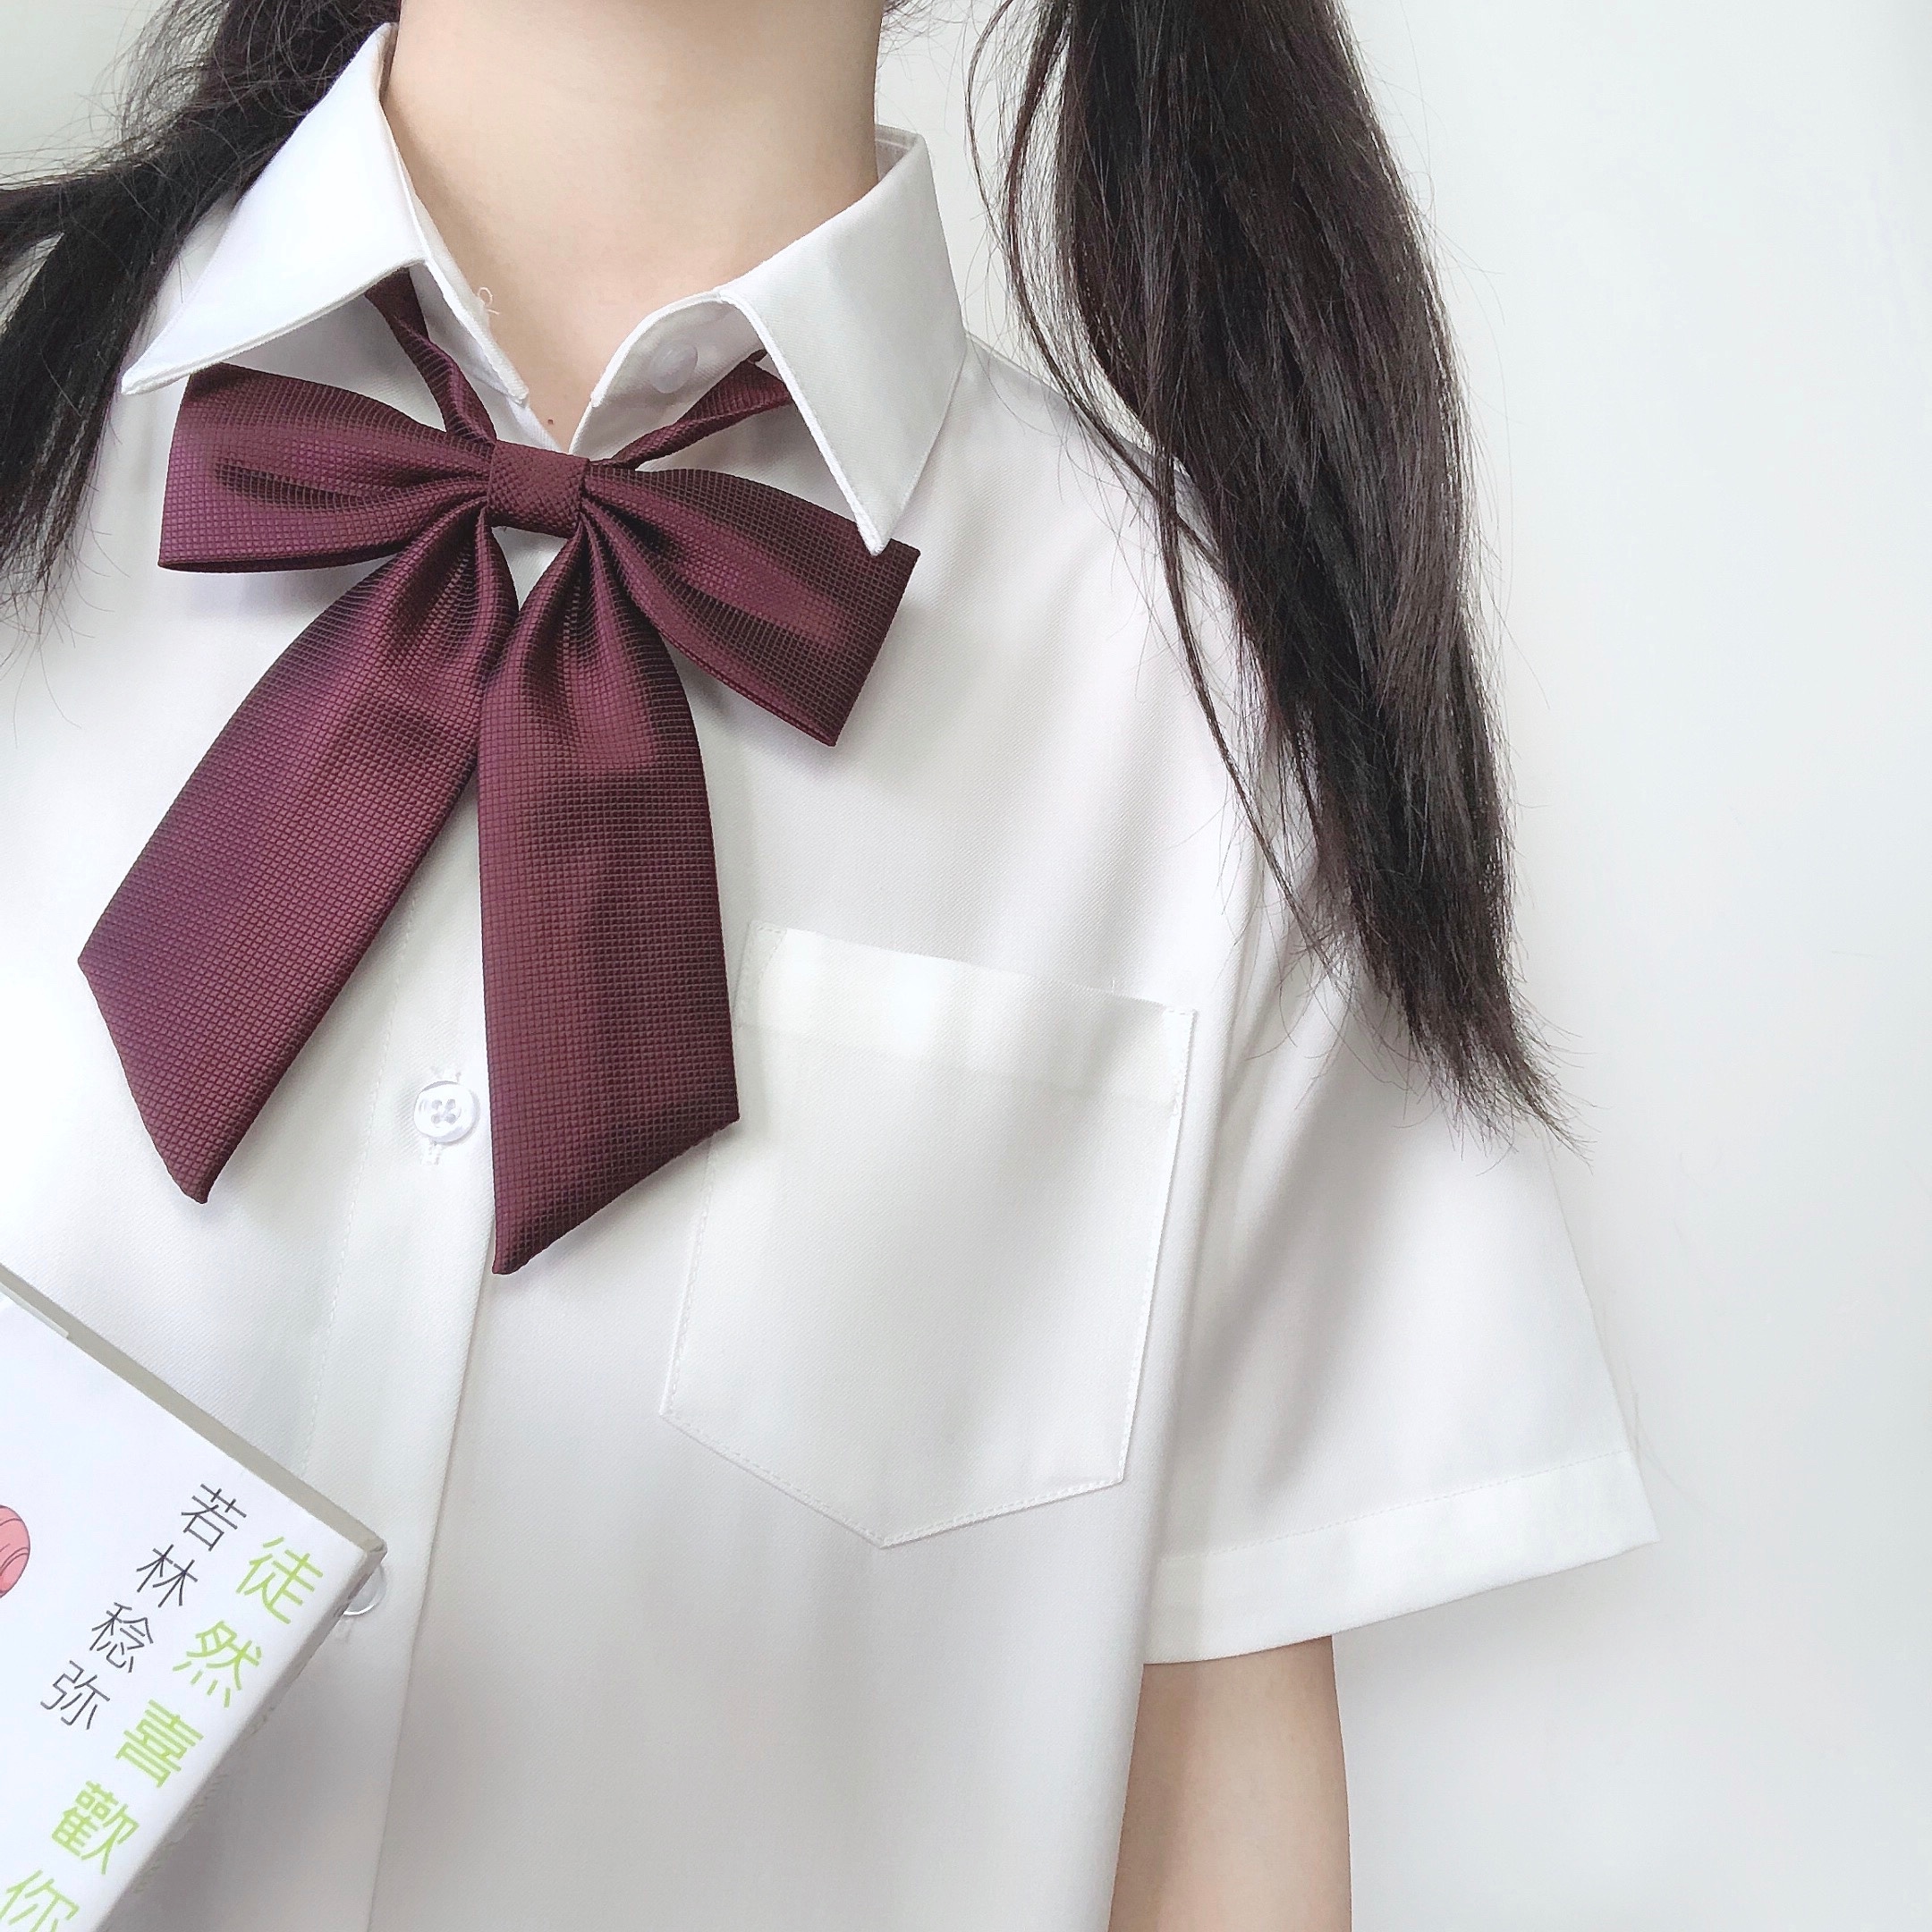 [Qoo10] 2枚セット学生服 スクールシャツ 女子 : レディース服